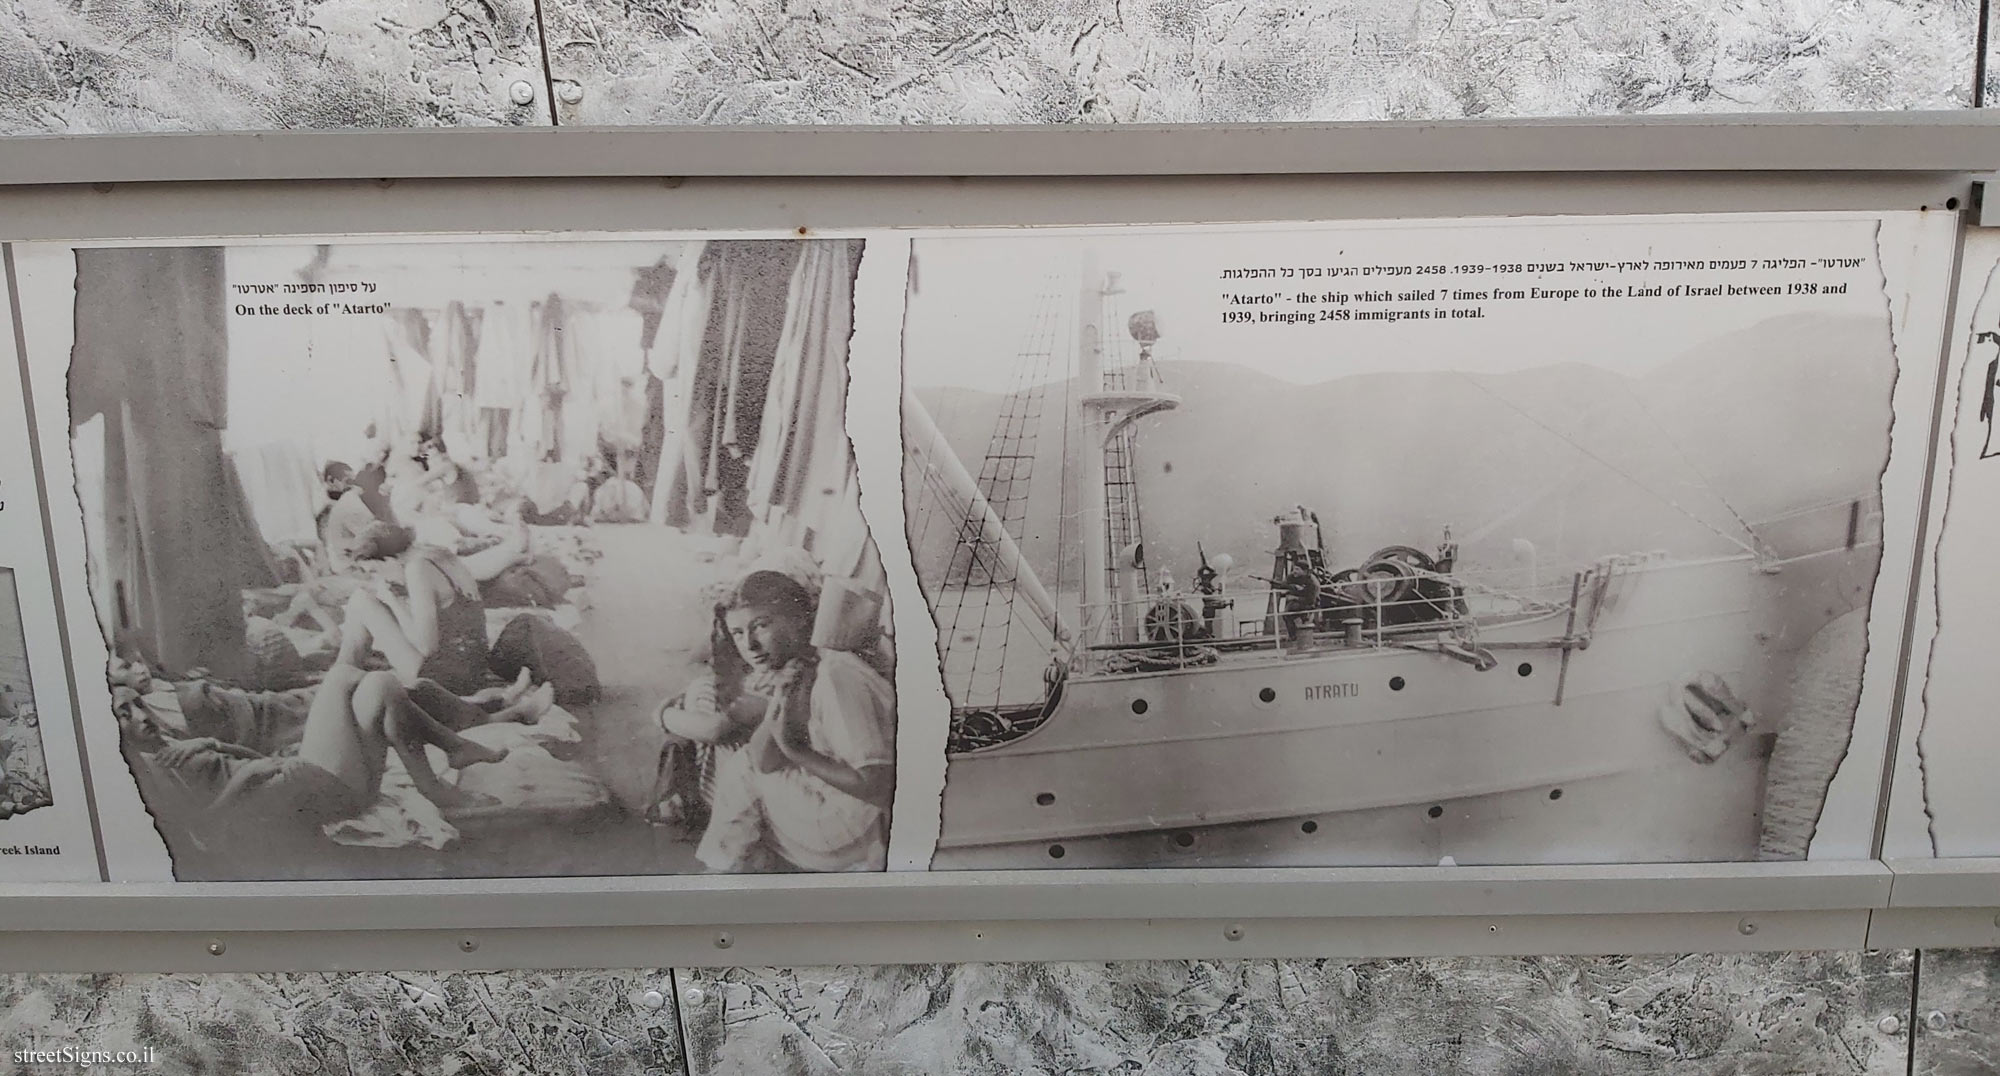 Tel Aviv - London Garden - The story of the illegal immigration - The ship "Atarto"